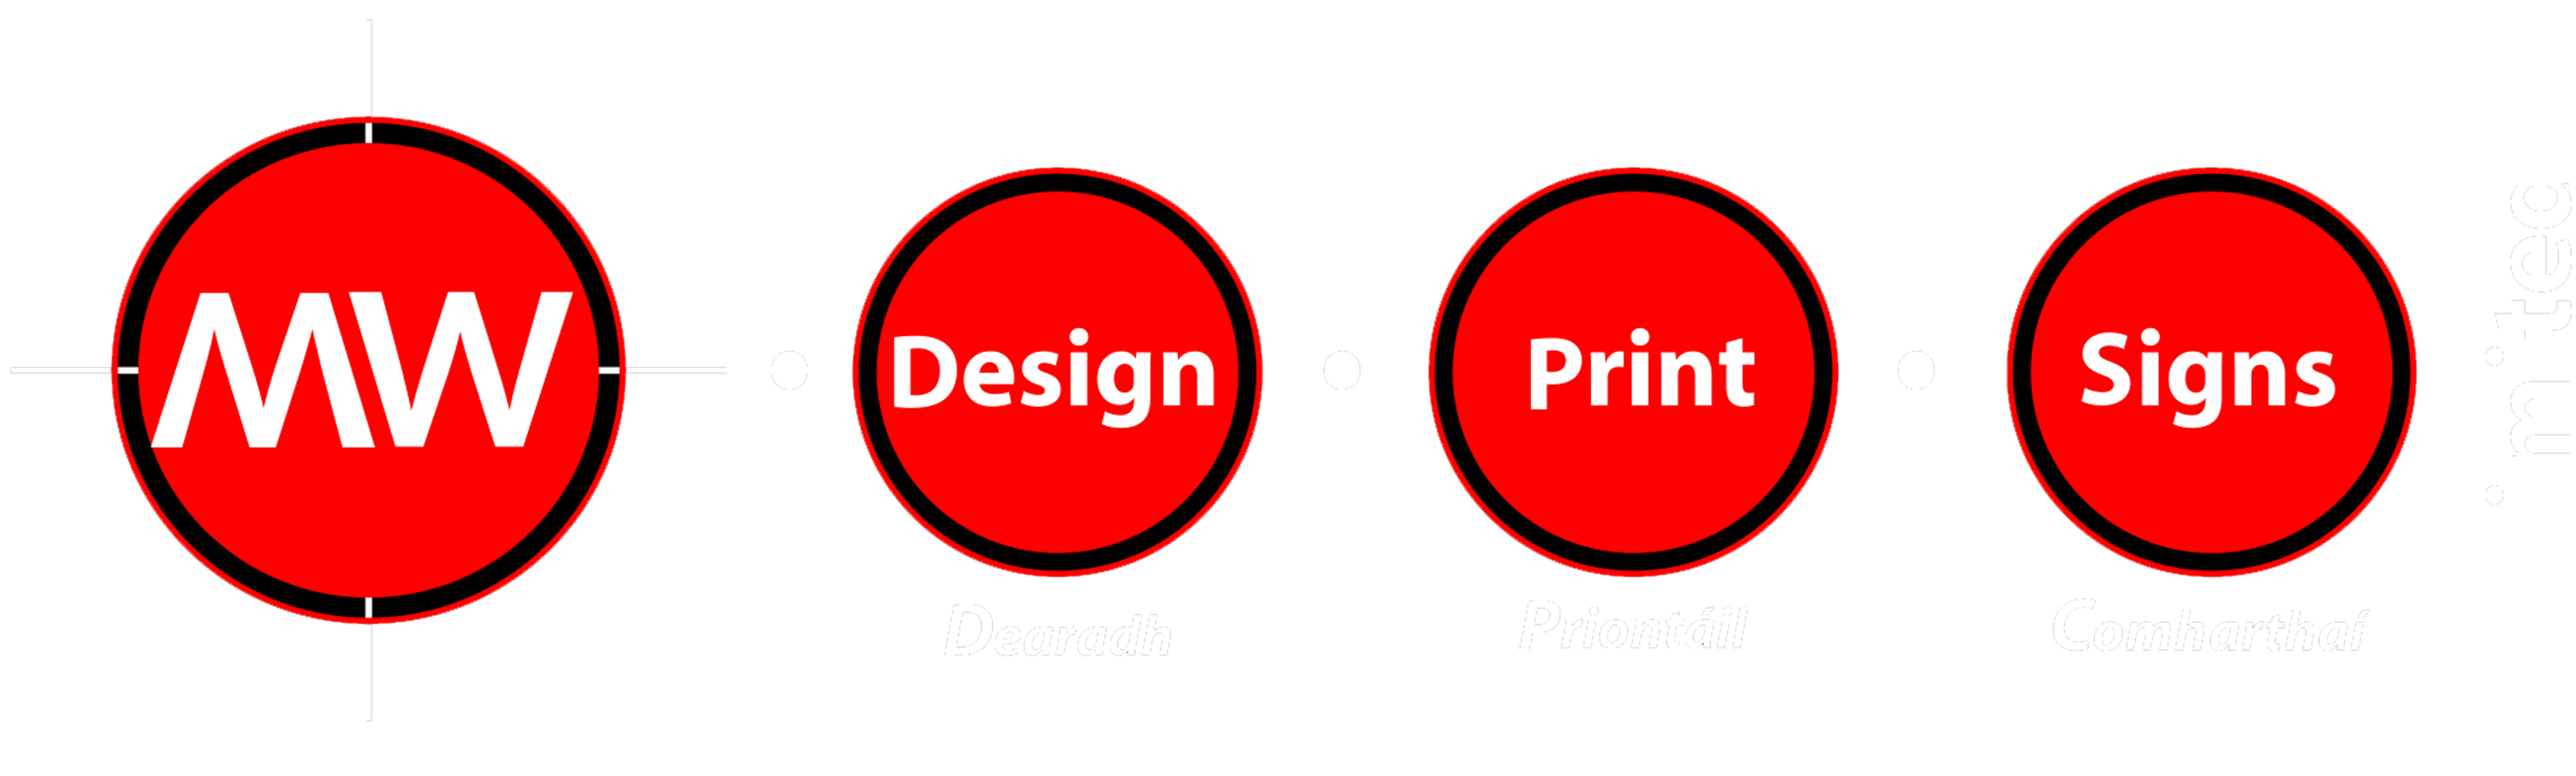 MW Design Print Signs